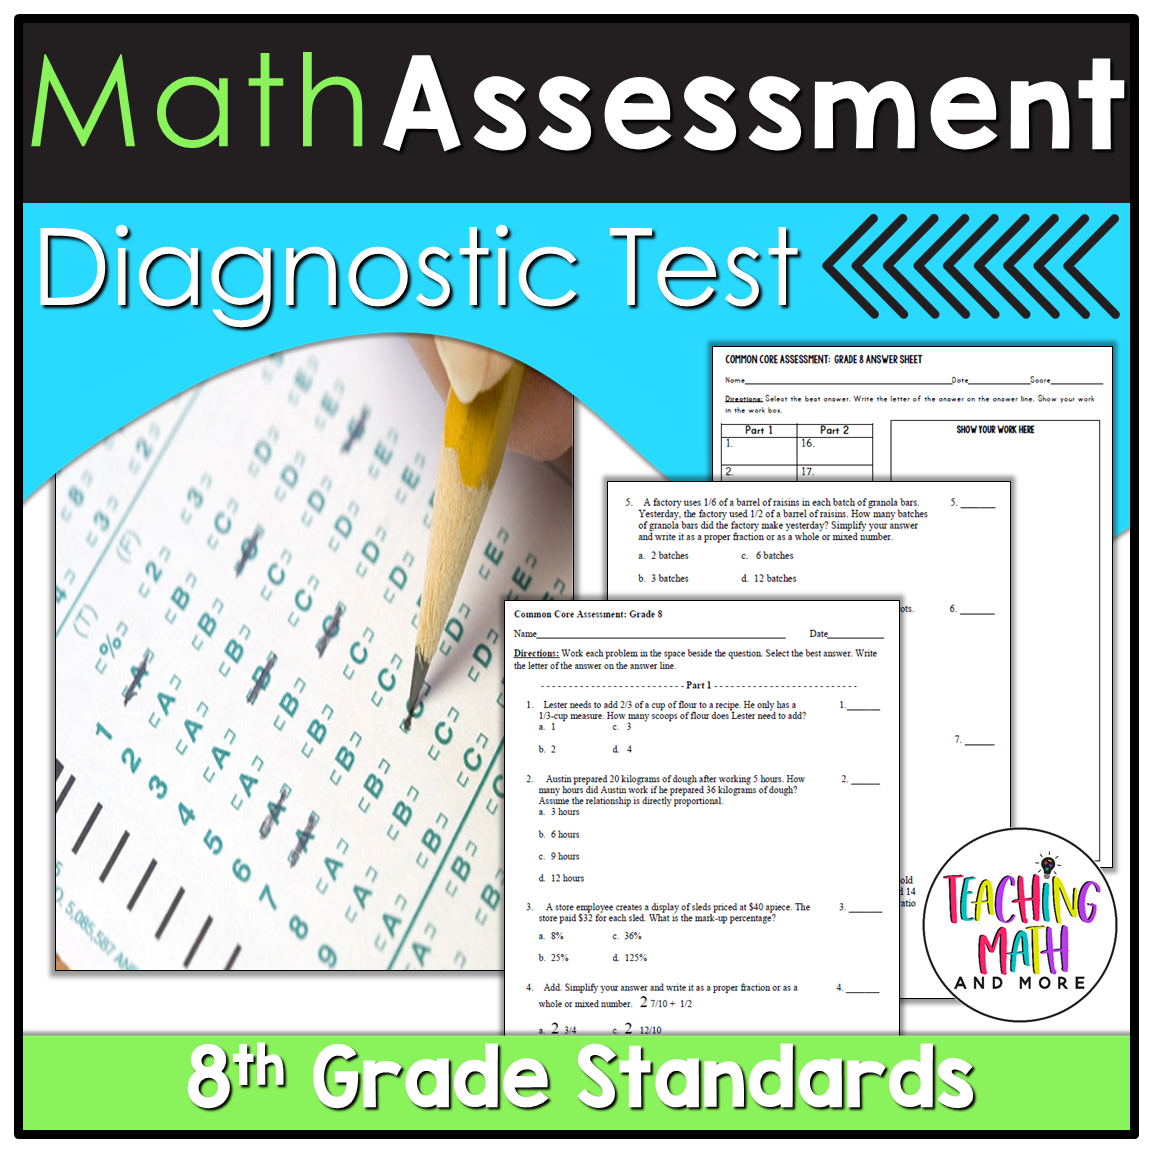 8th Grade Math Diagnostic Test Teaching Math And More 0308